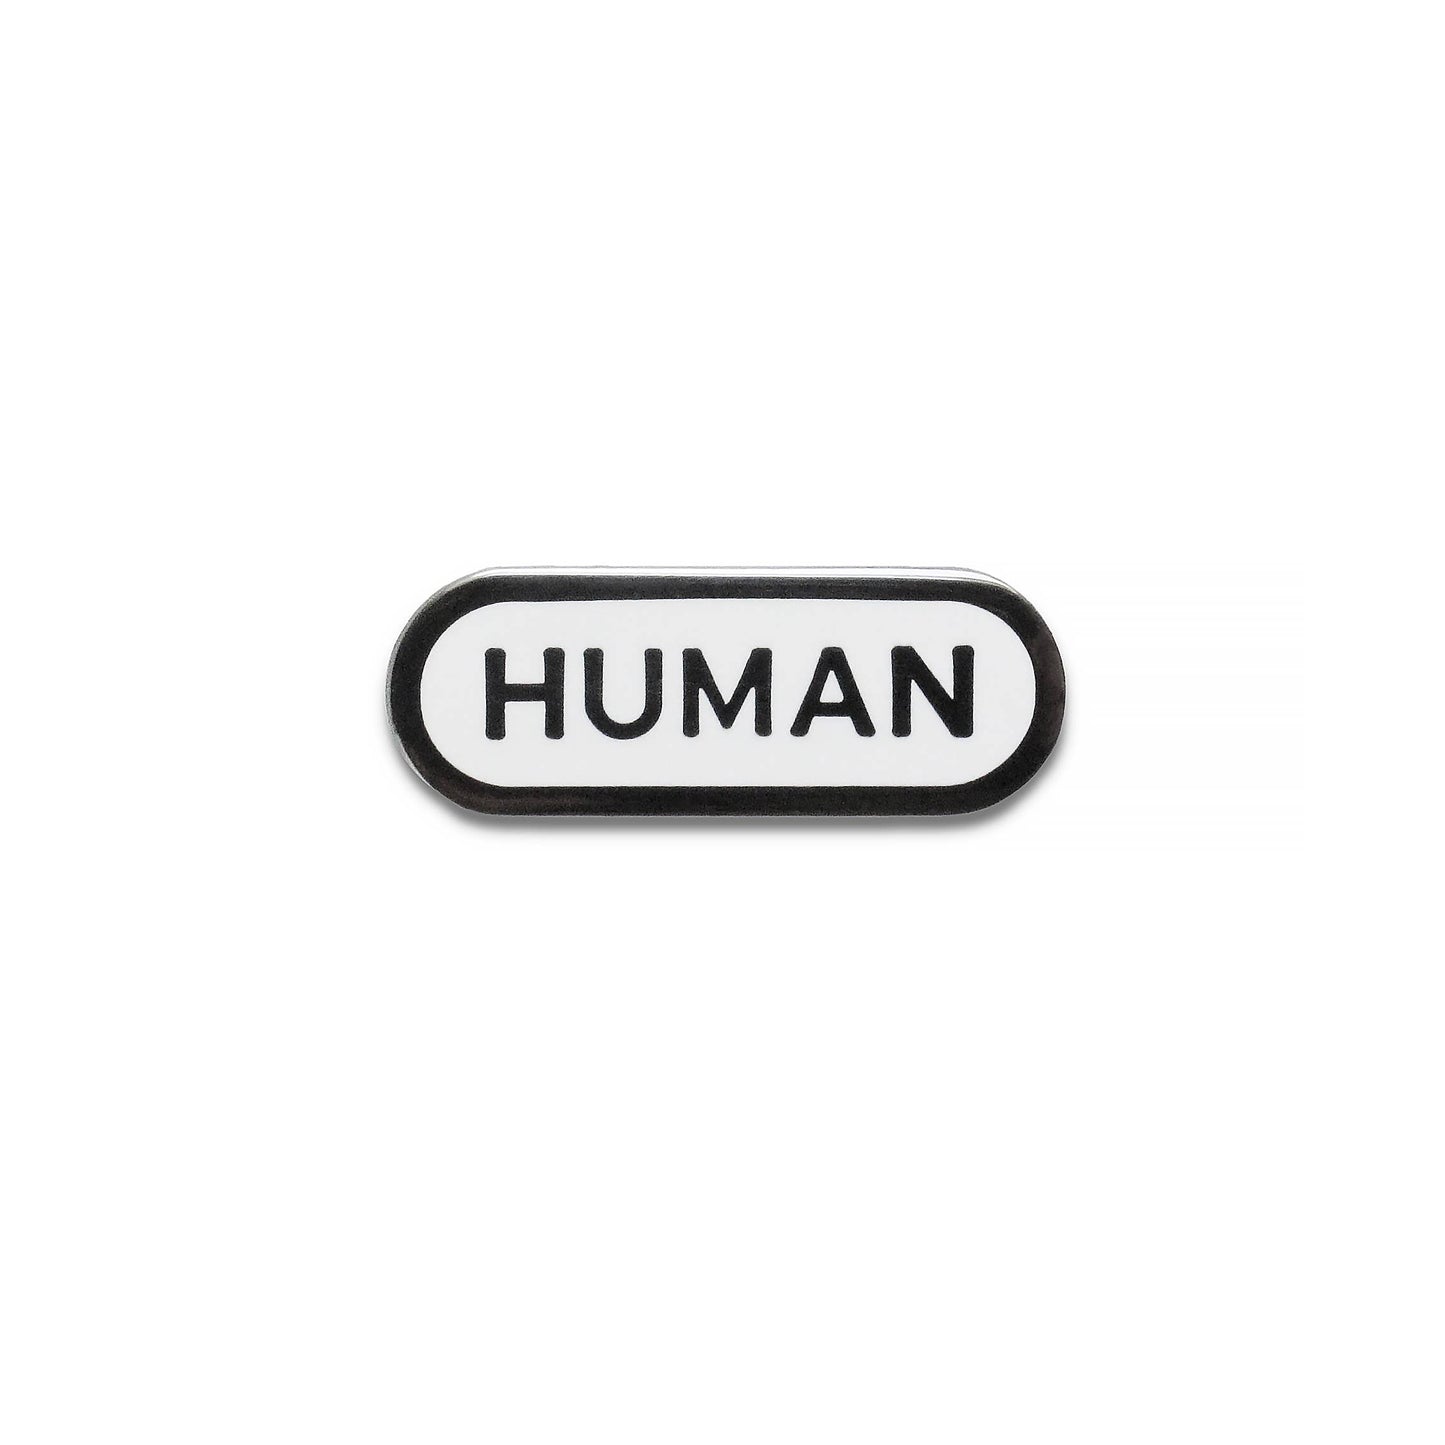 HUMAN Enamel Pin